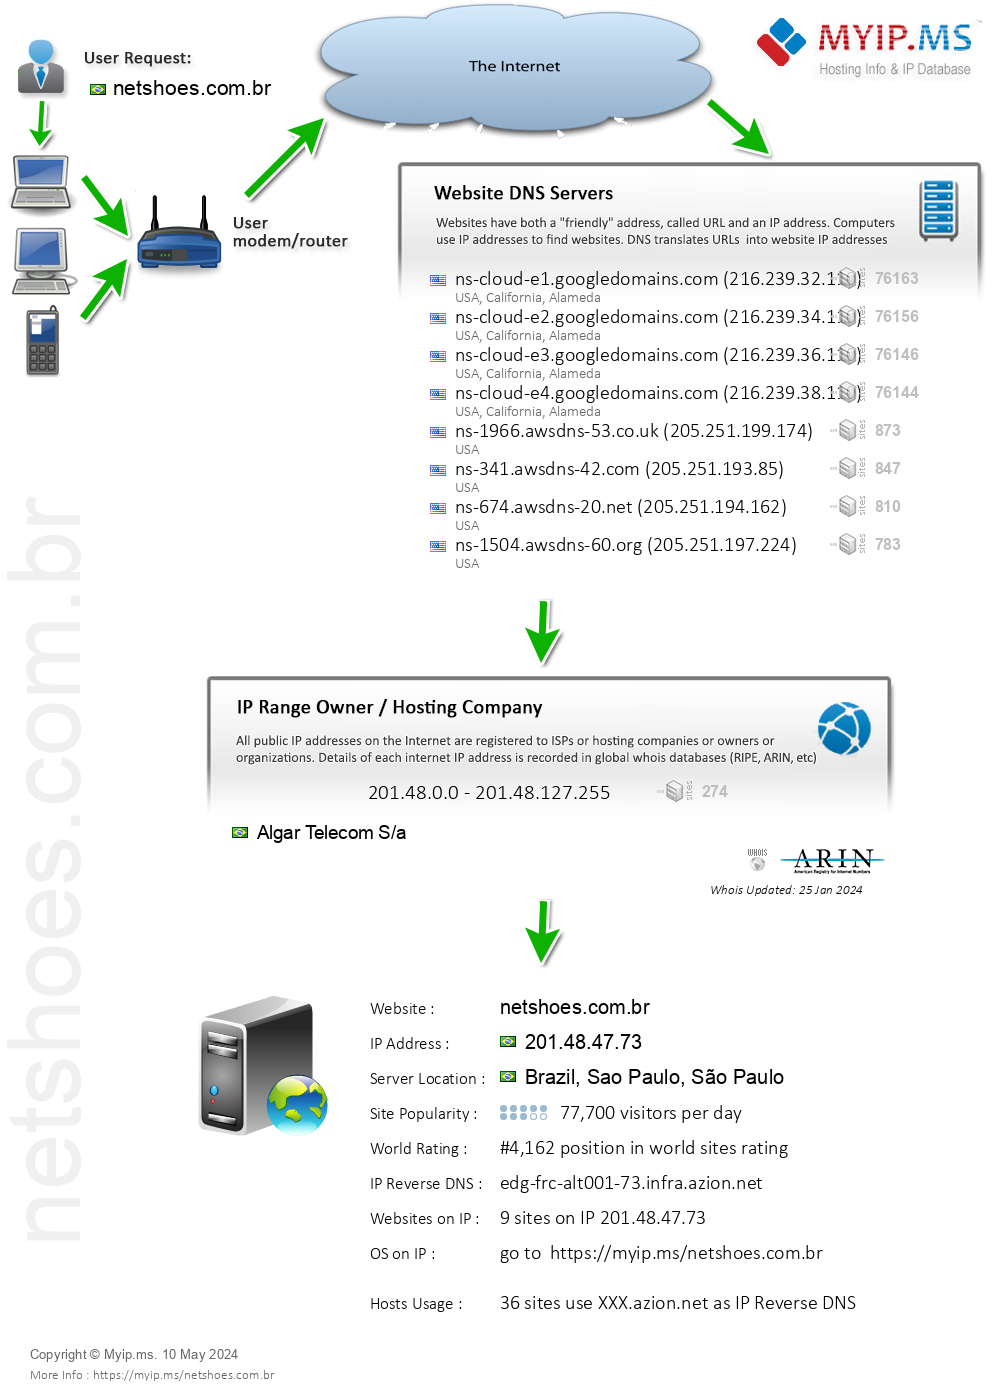 Netshoes.com.br - Website Hosting Visual IP Diagram